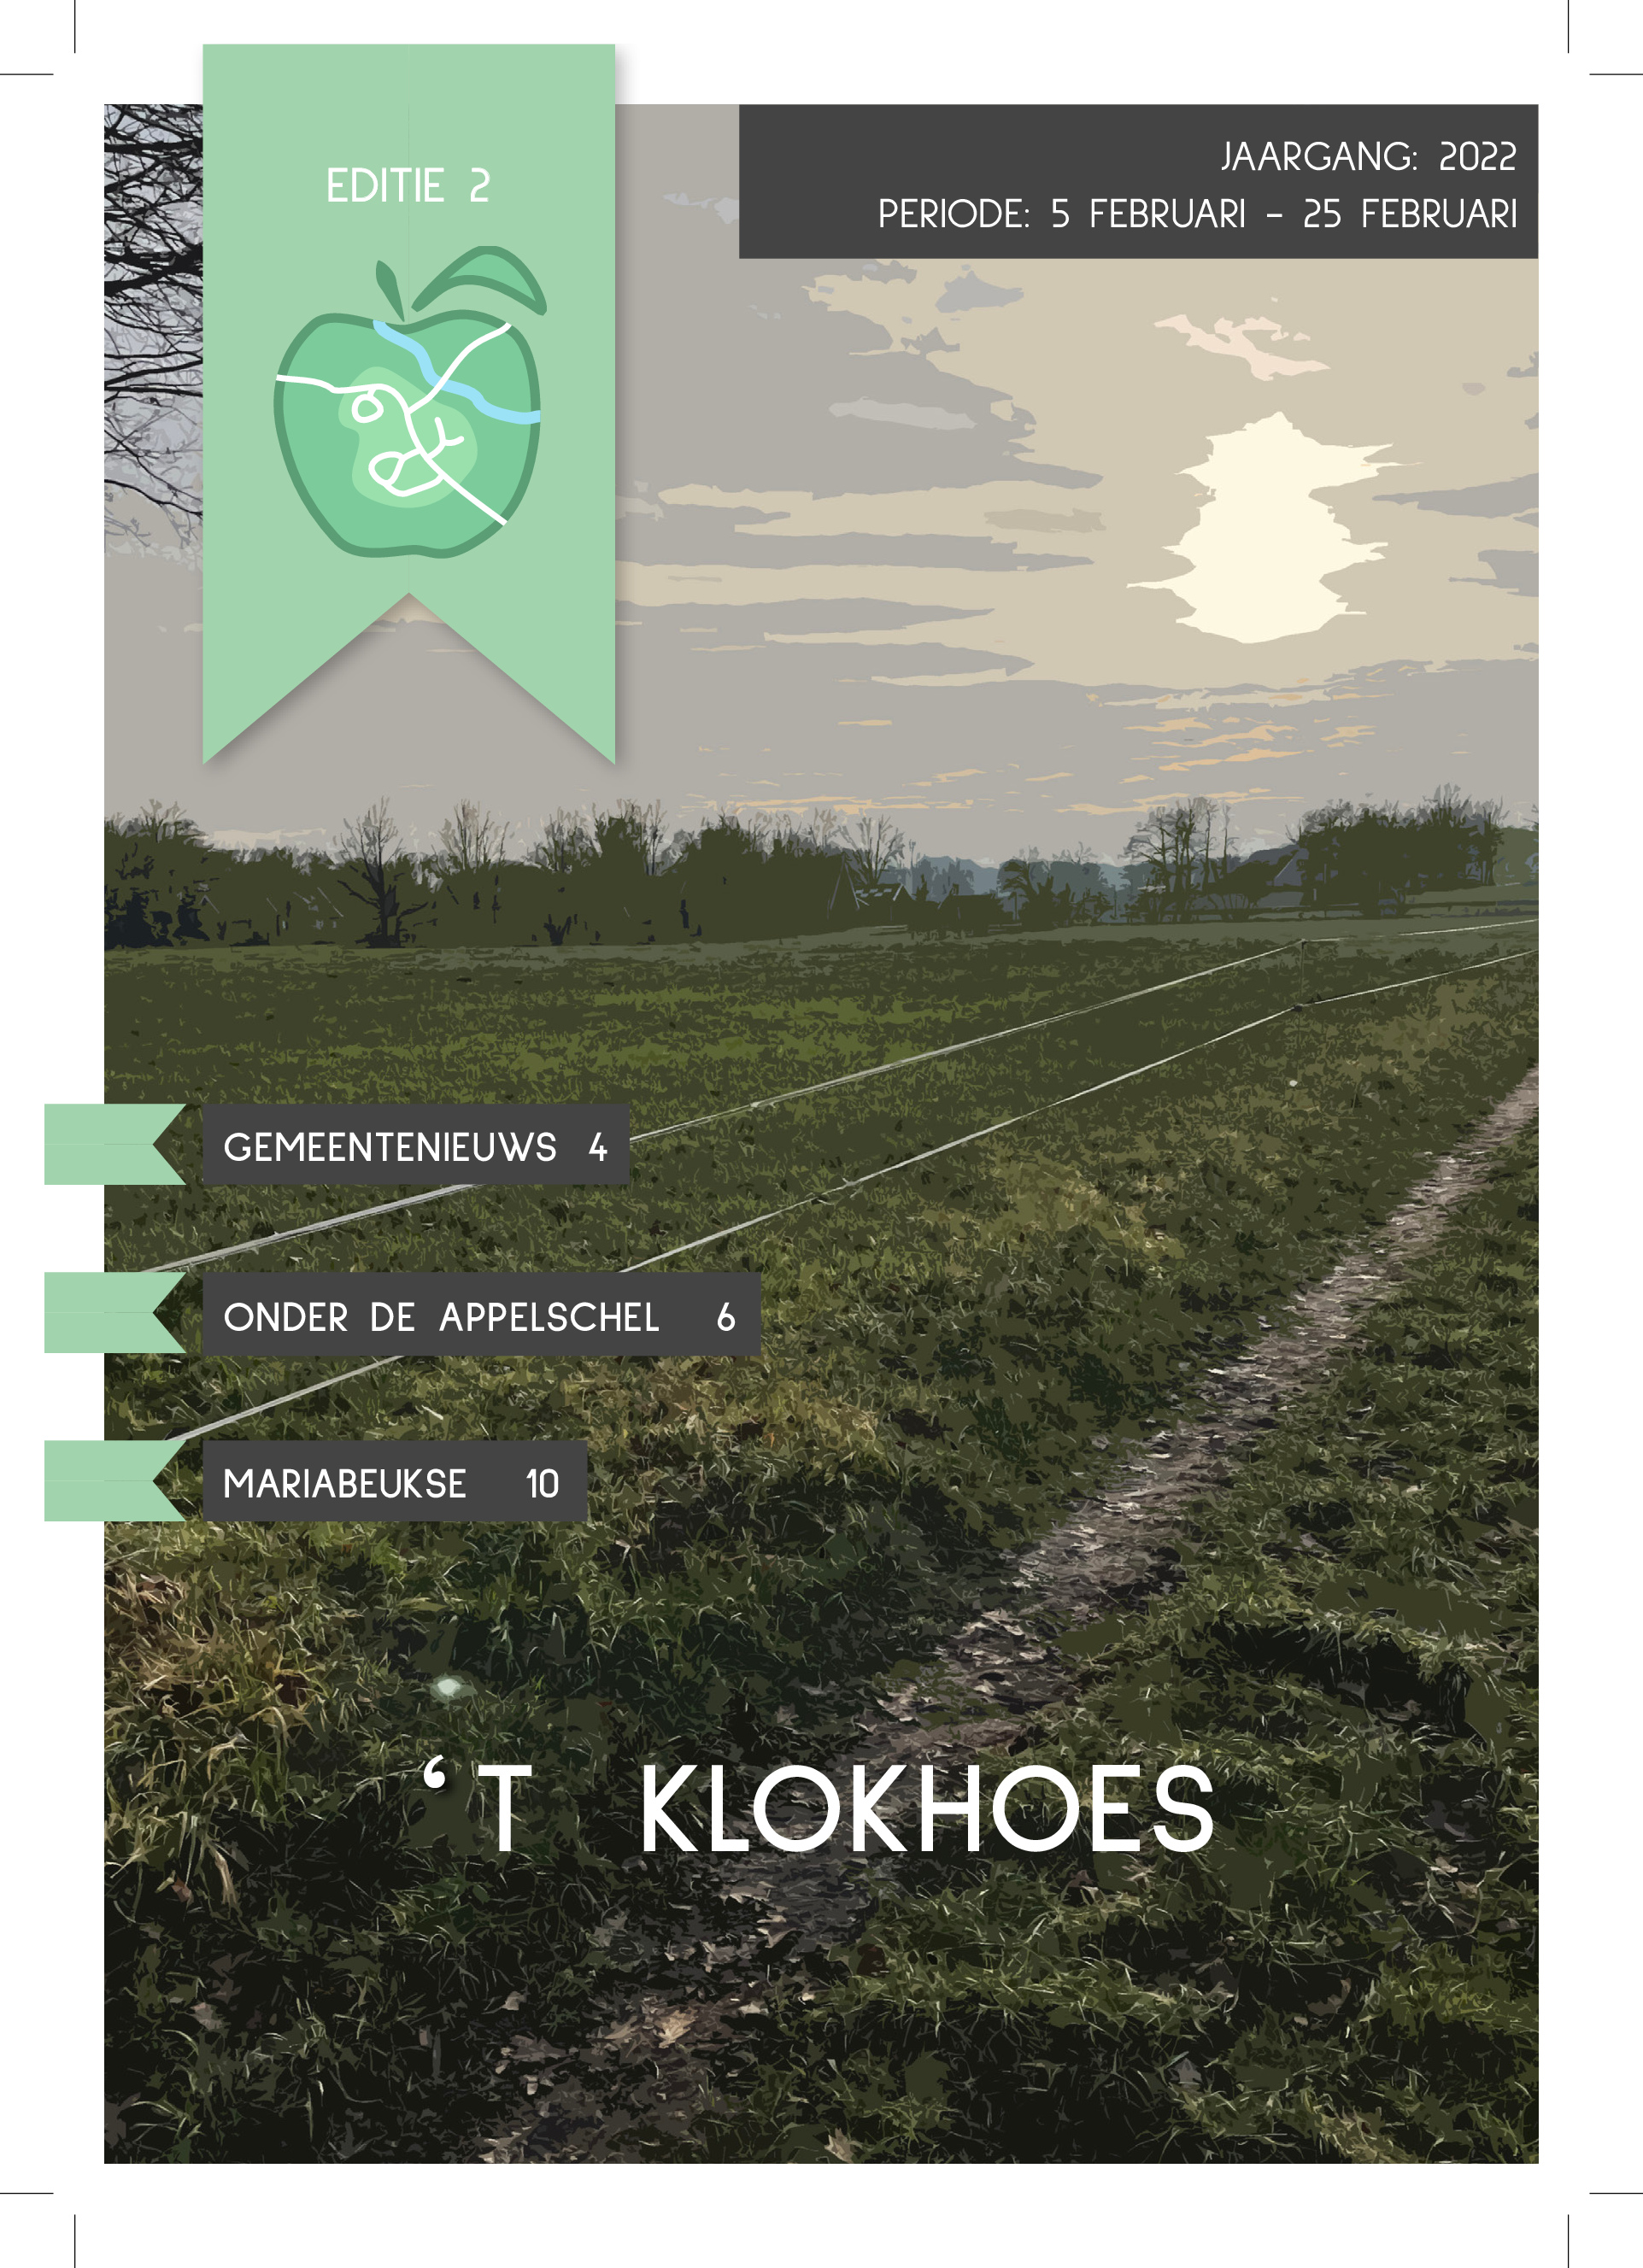 Dorpsblad 't Klokhoes editie 2 2022